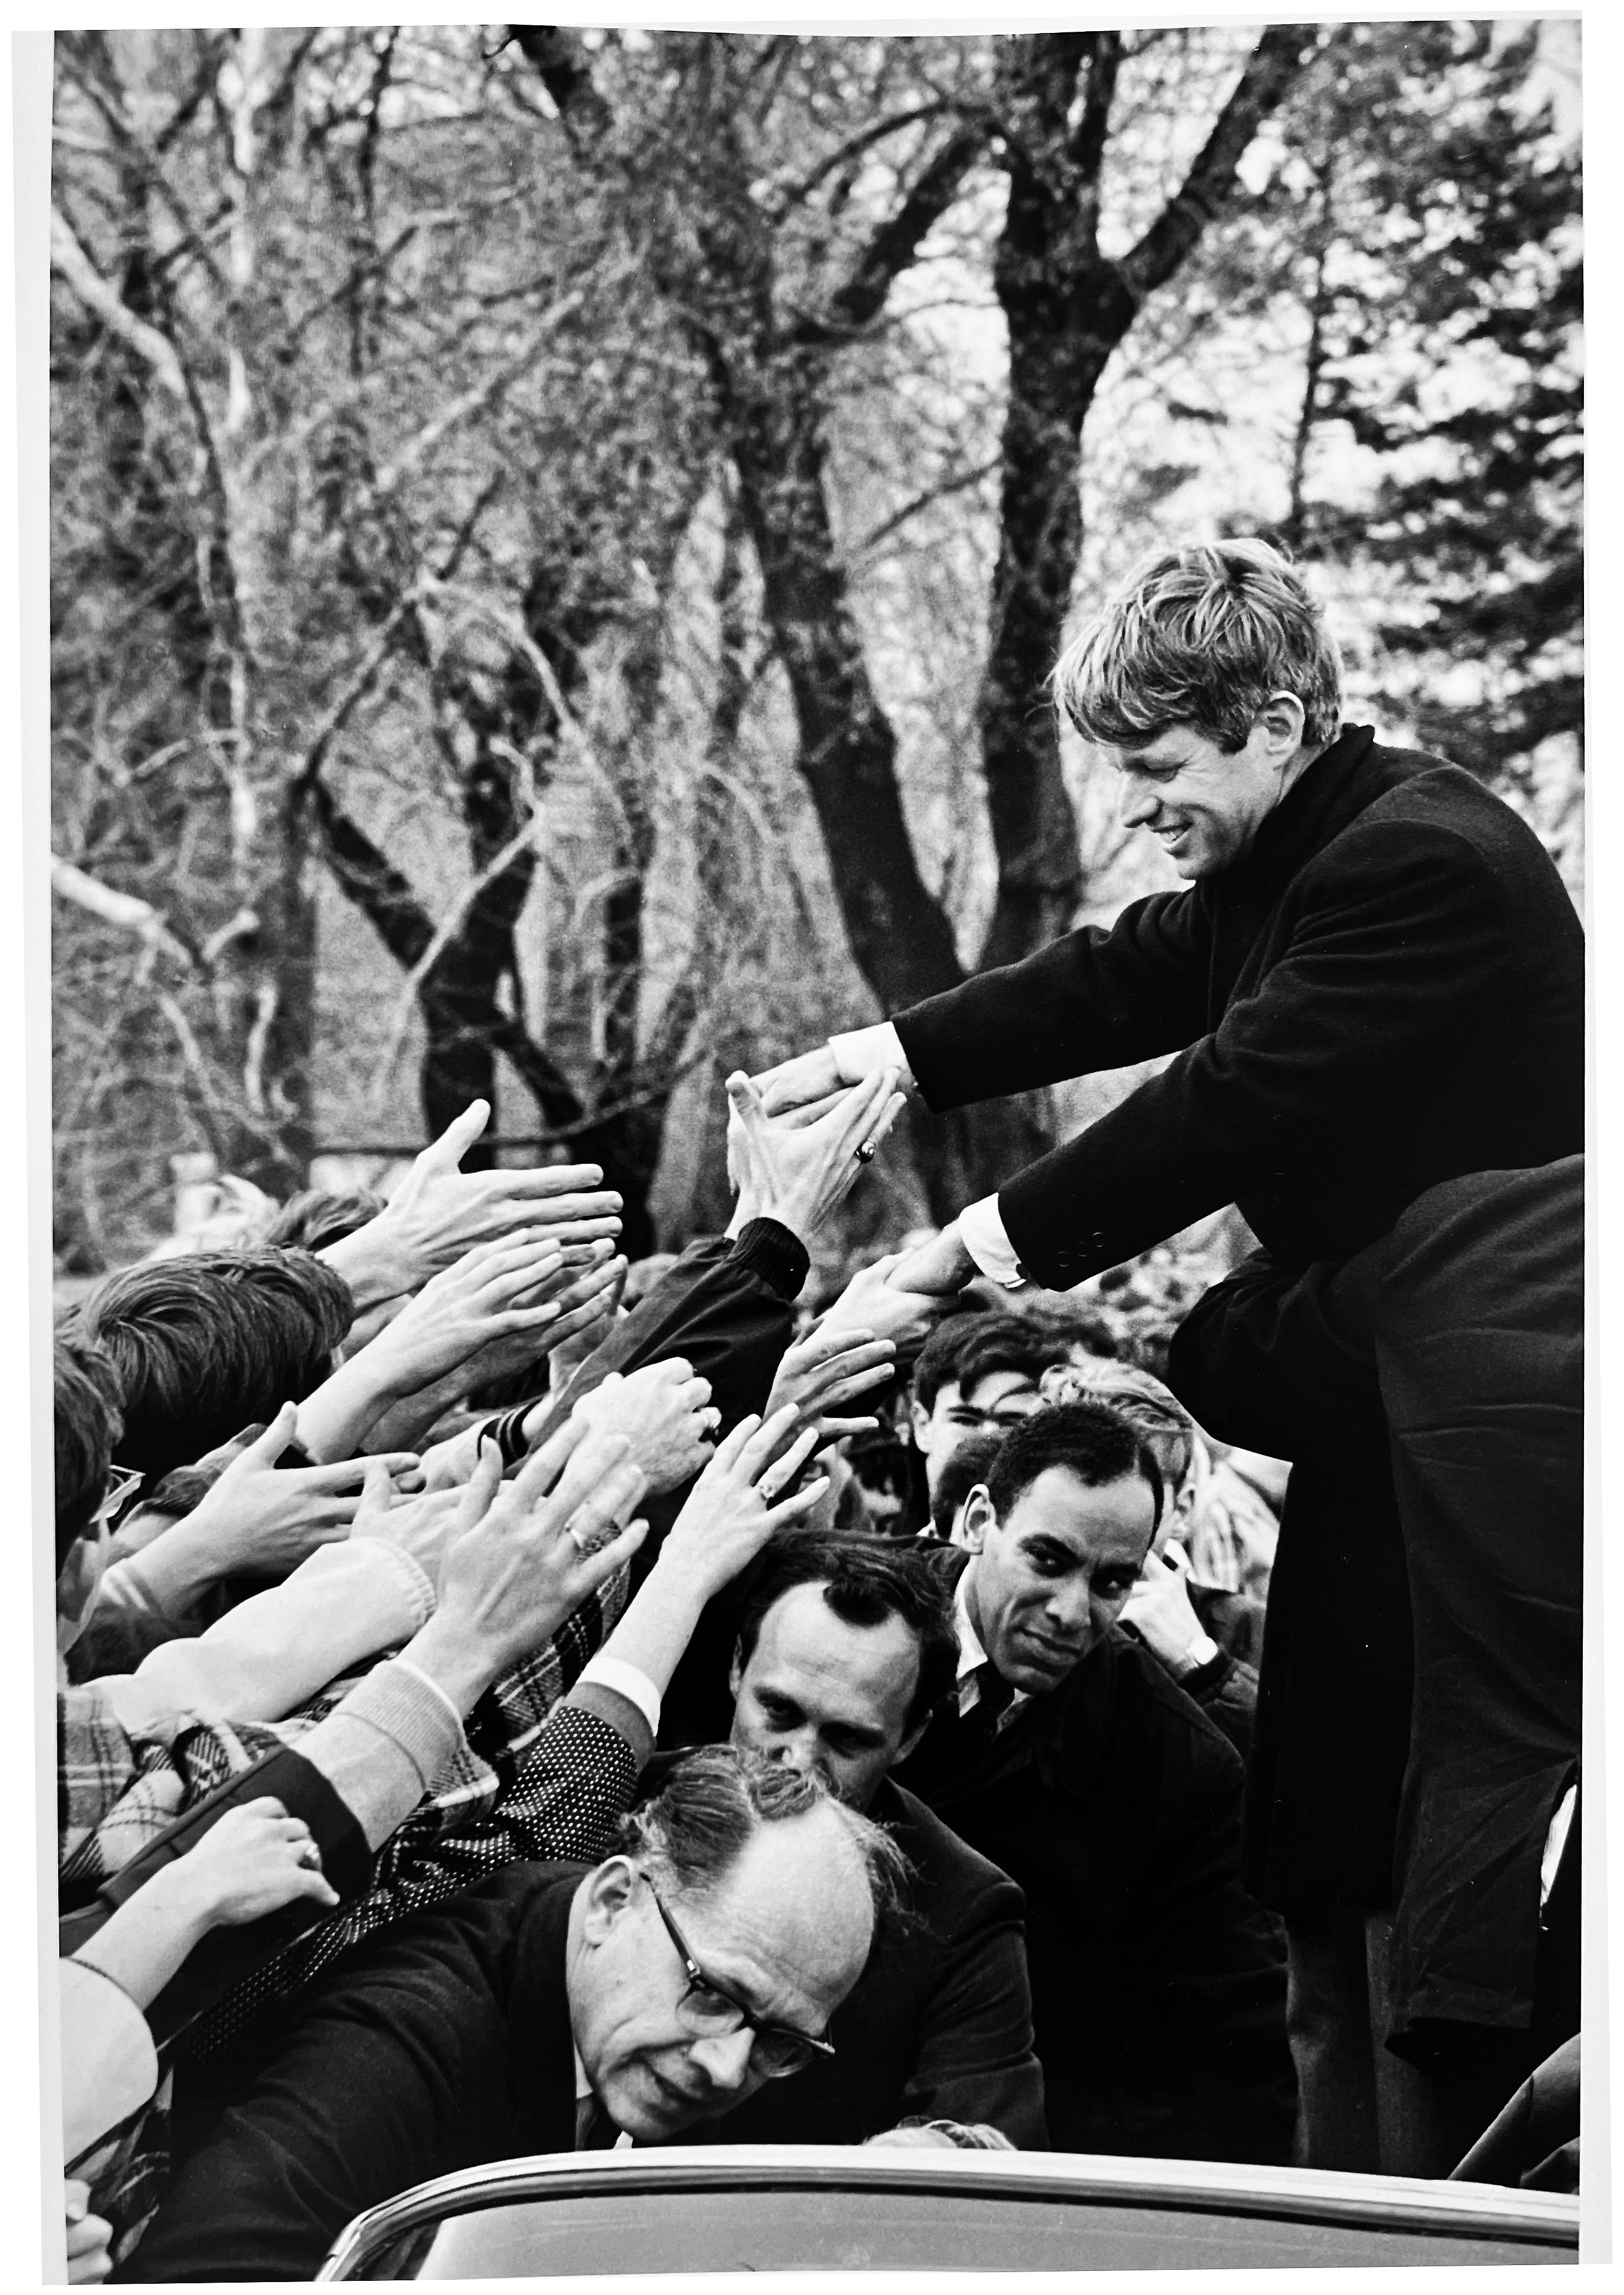 Burt Glinn Black and White Photograph - Robert Kennedy (RFK) Campaign Trail, Black and White Portrait Photography 1960s